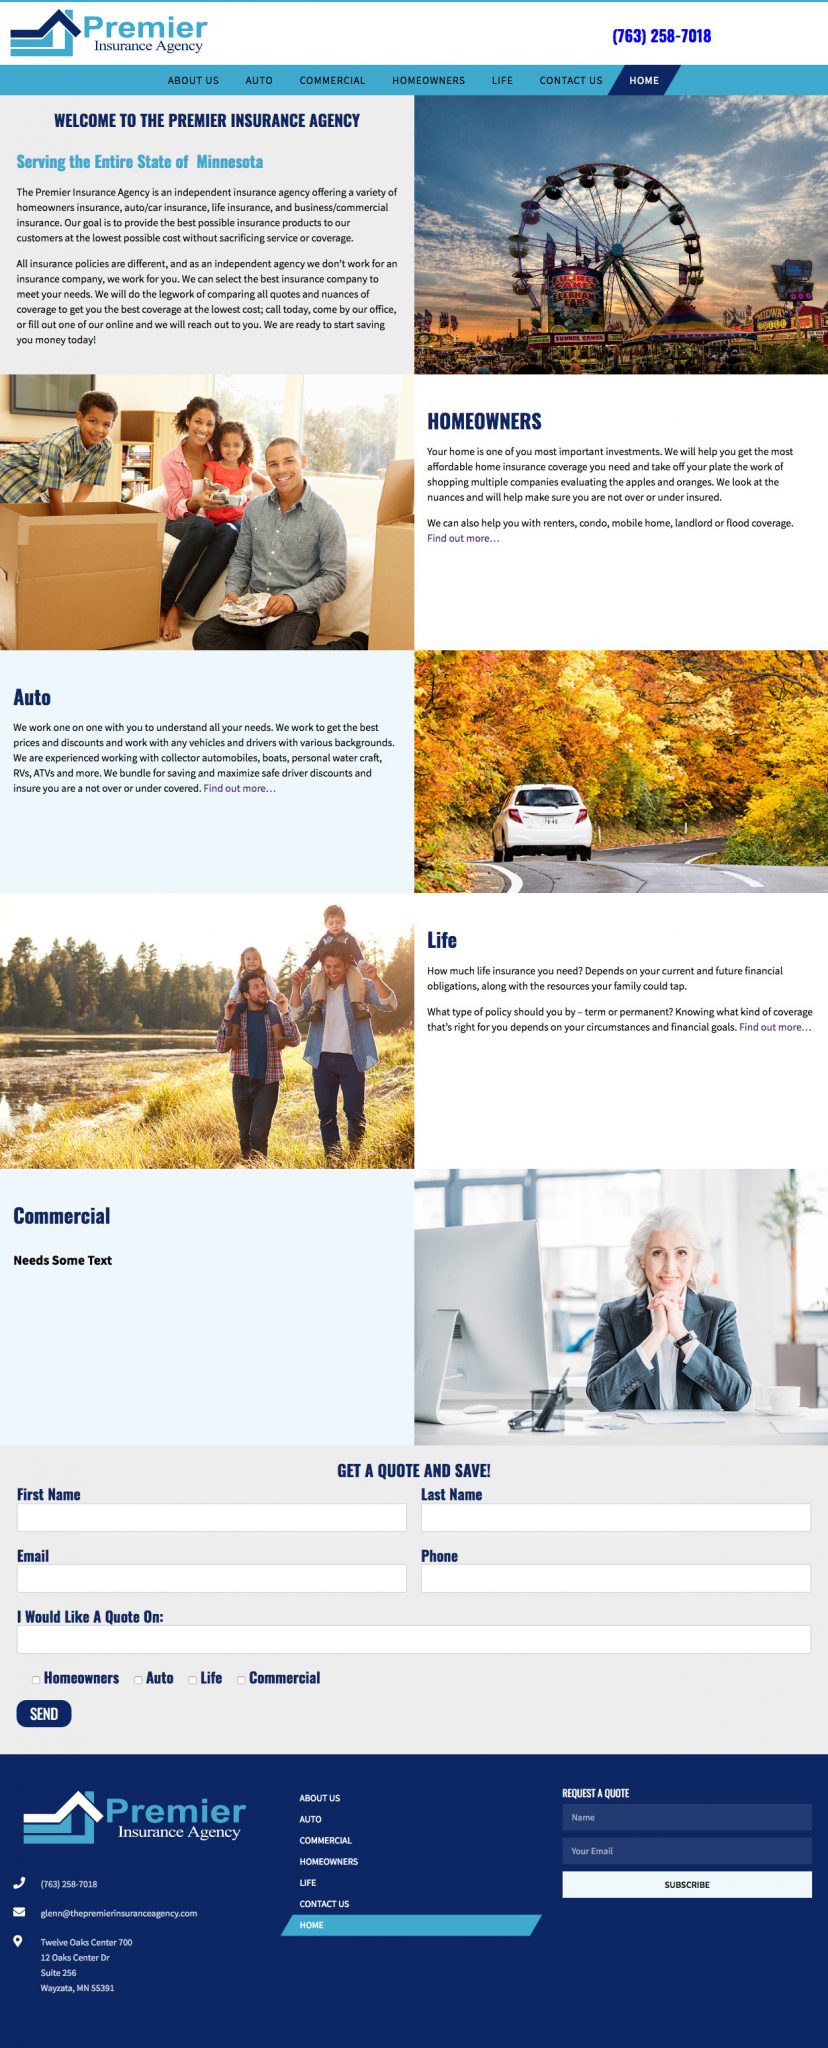 The Premier Insurance Agency Website